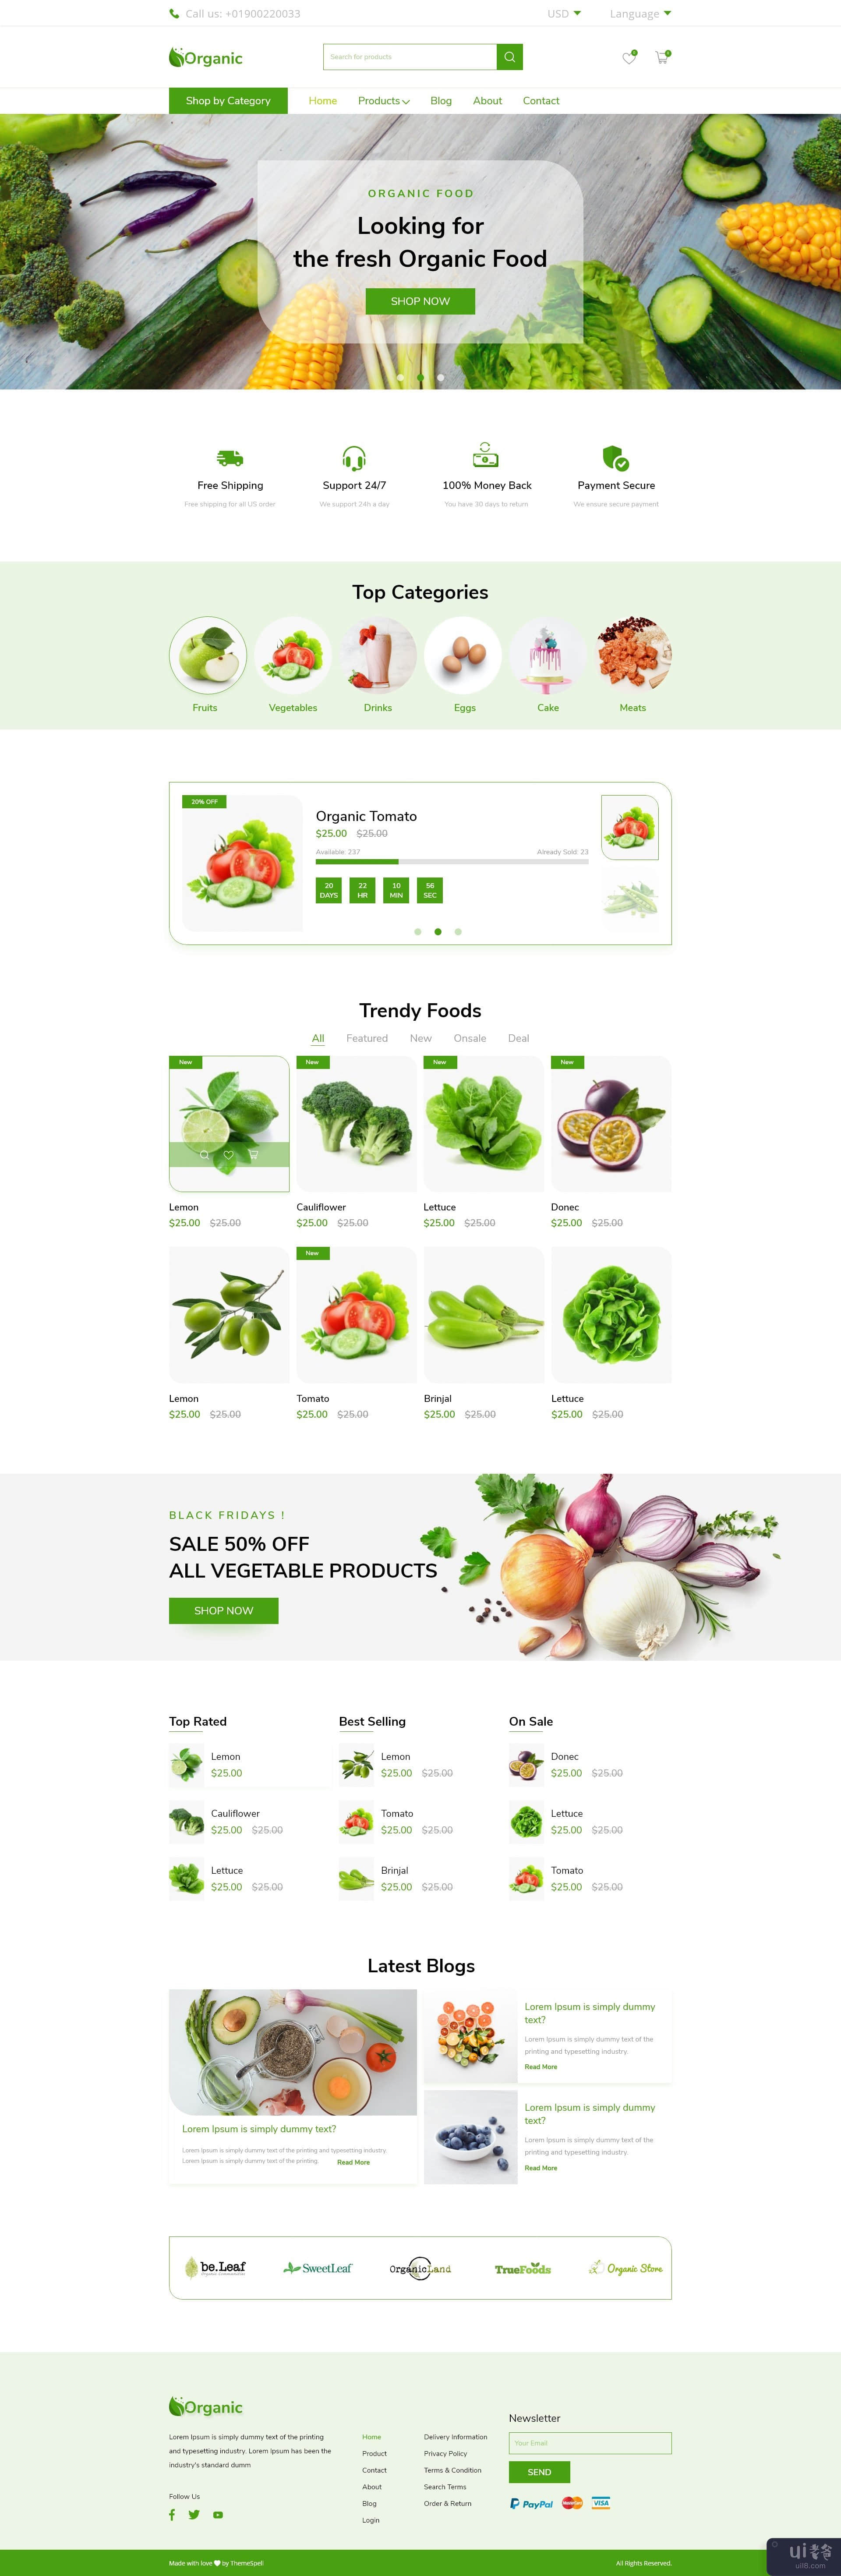 有机-有机食品网站UI设计(Organic-Organic Food Website UI Design)插图1